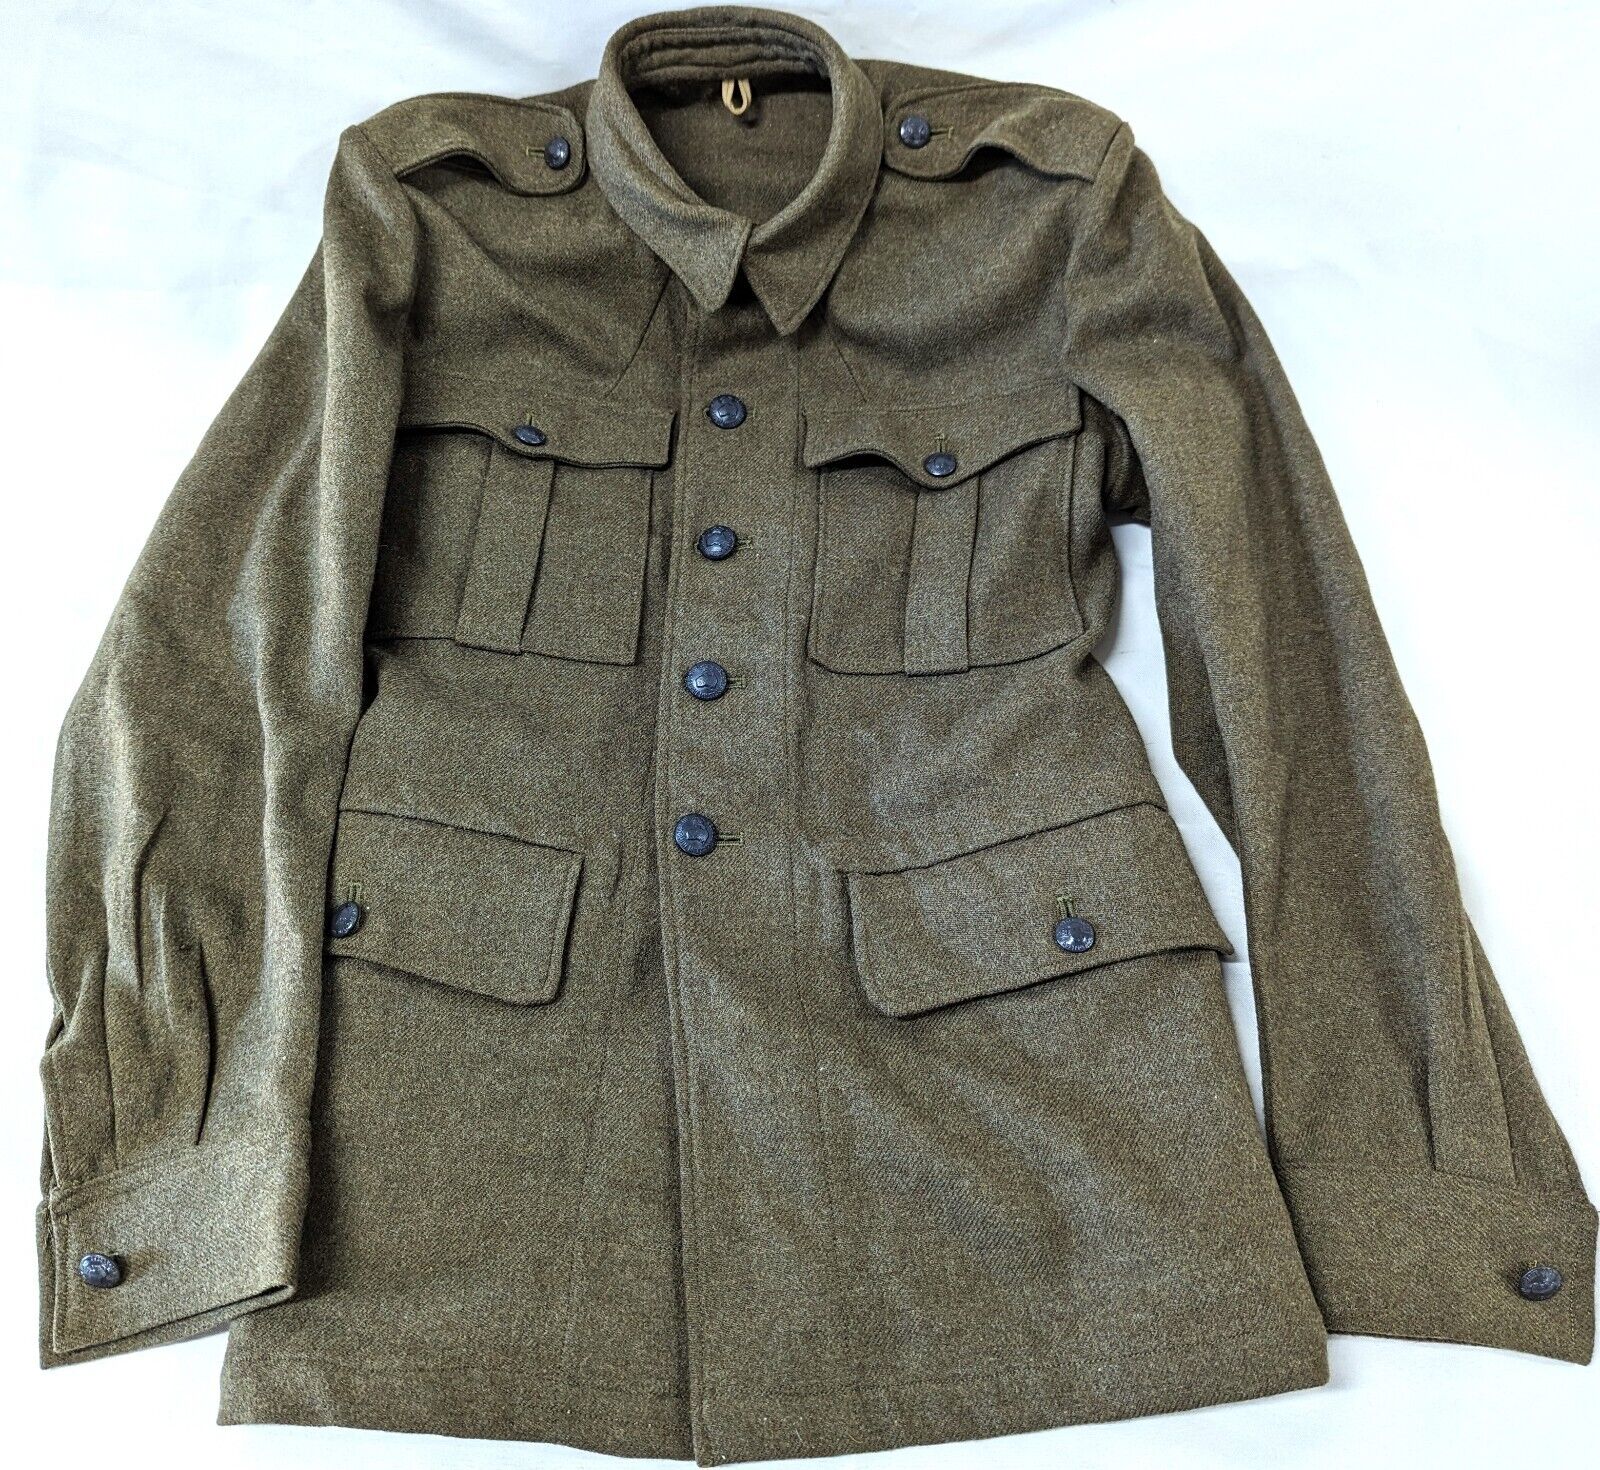 Obsolete vintage WW2 1943 Australian army AIF uniform tunic jacket #2